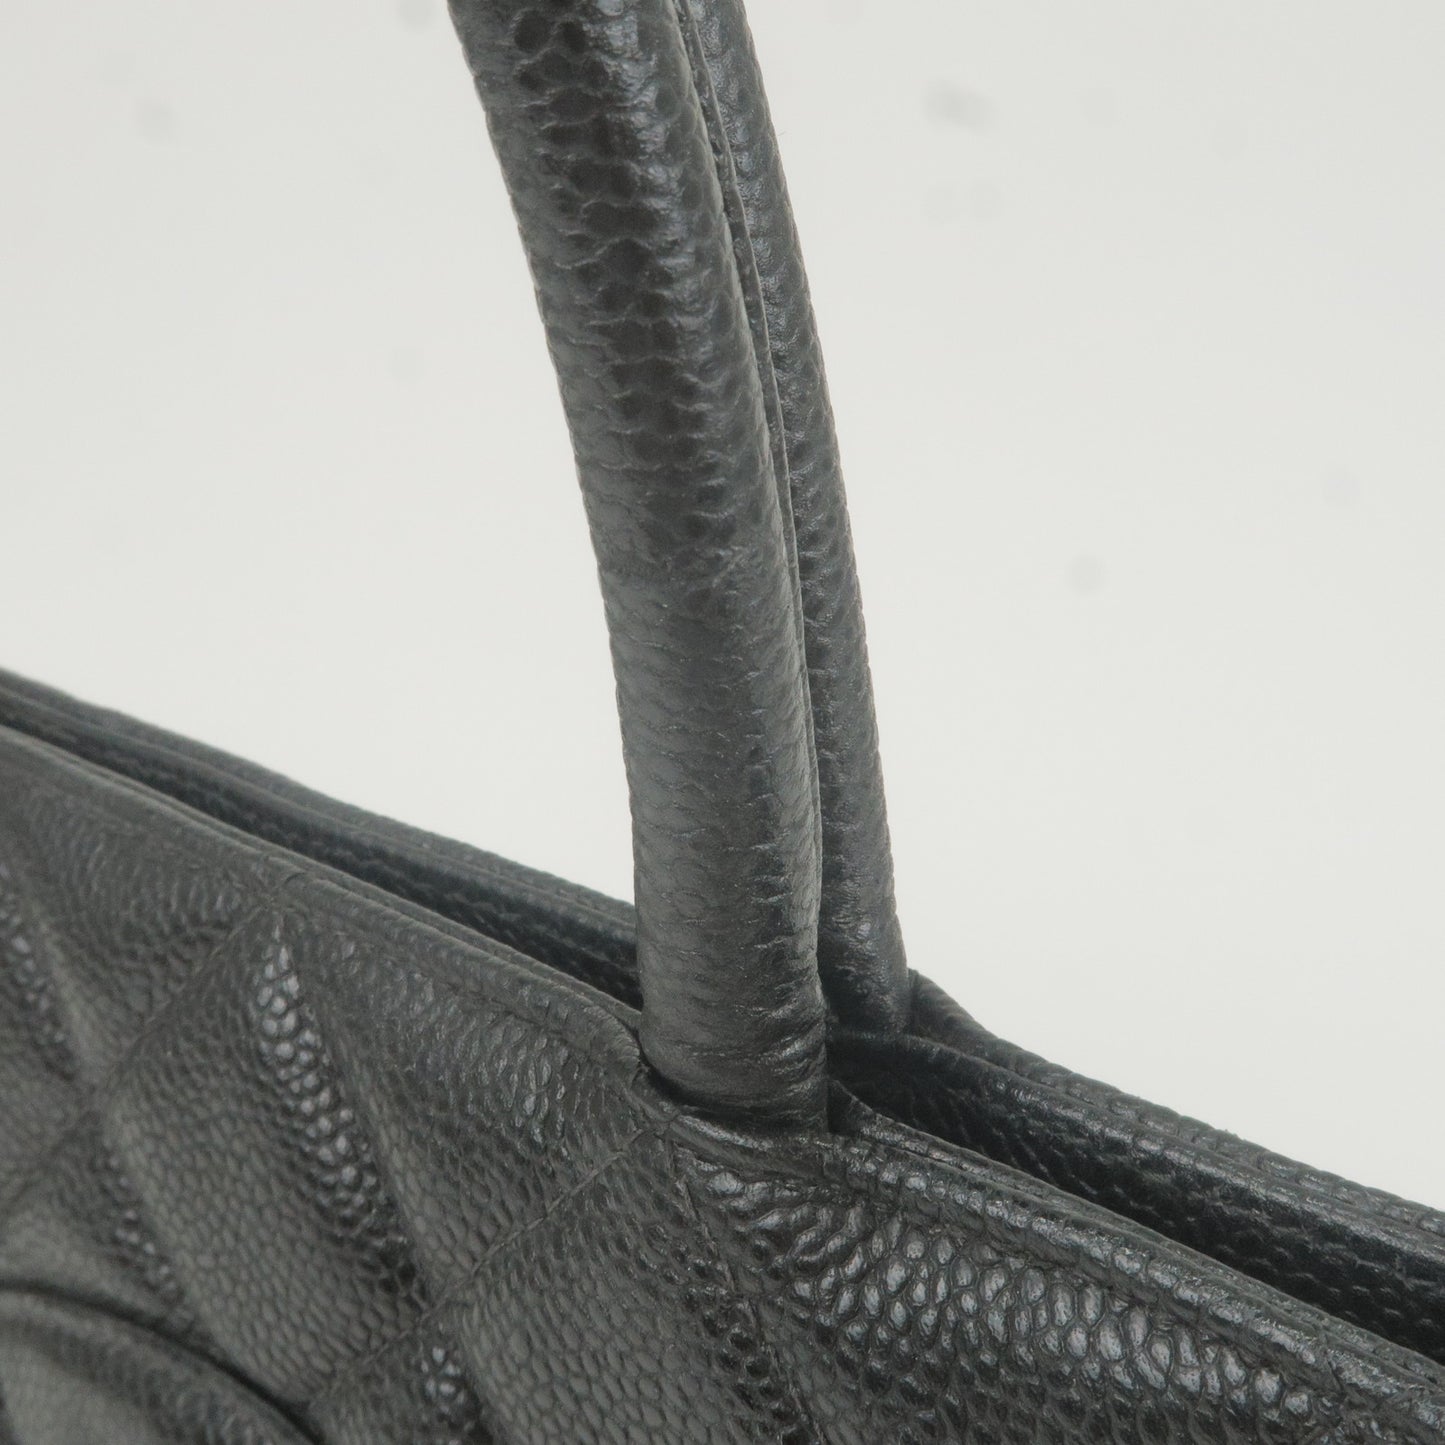 CHANEL Matelasse Caviar Skin Tote Bag Hand Bag Black A01804